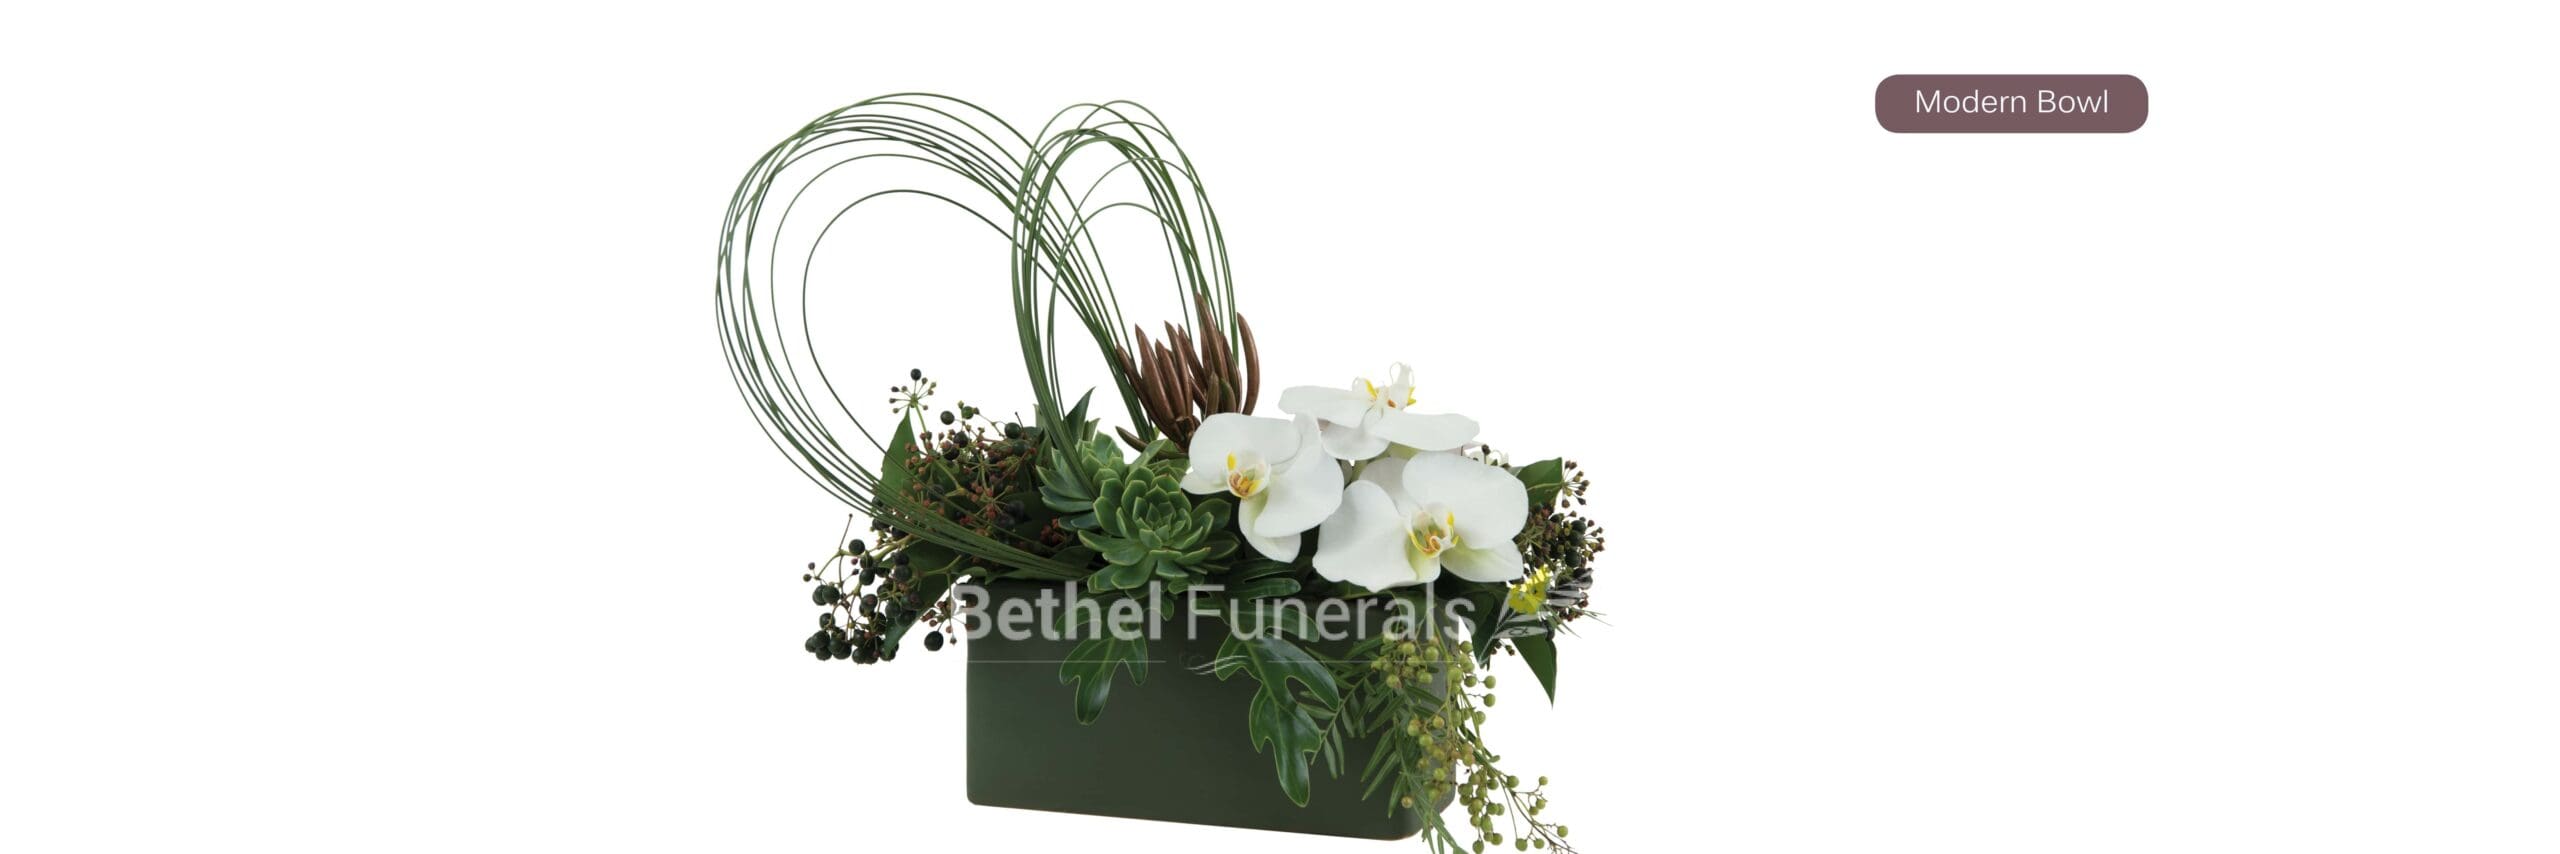 modern bowl funeral flowers